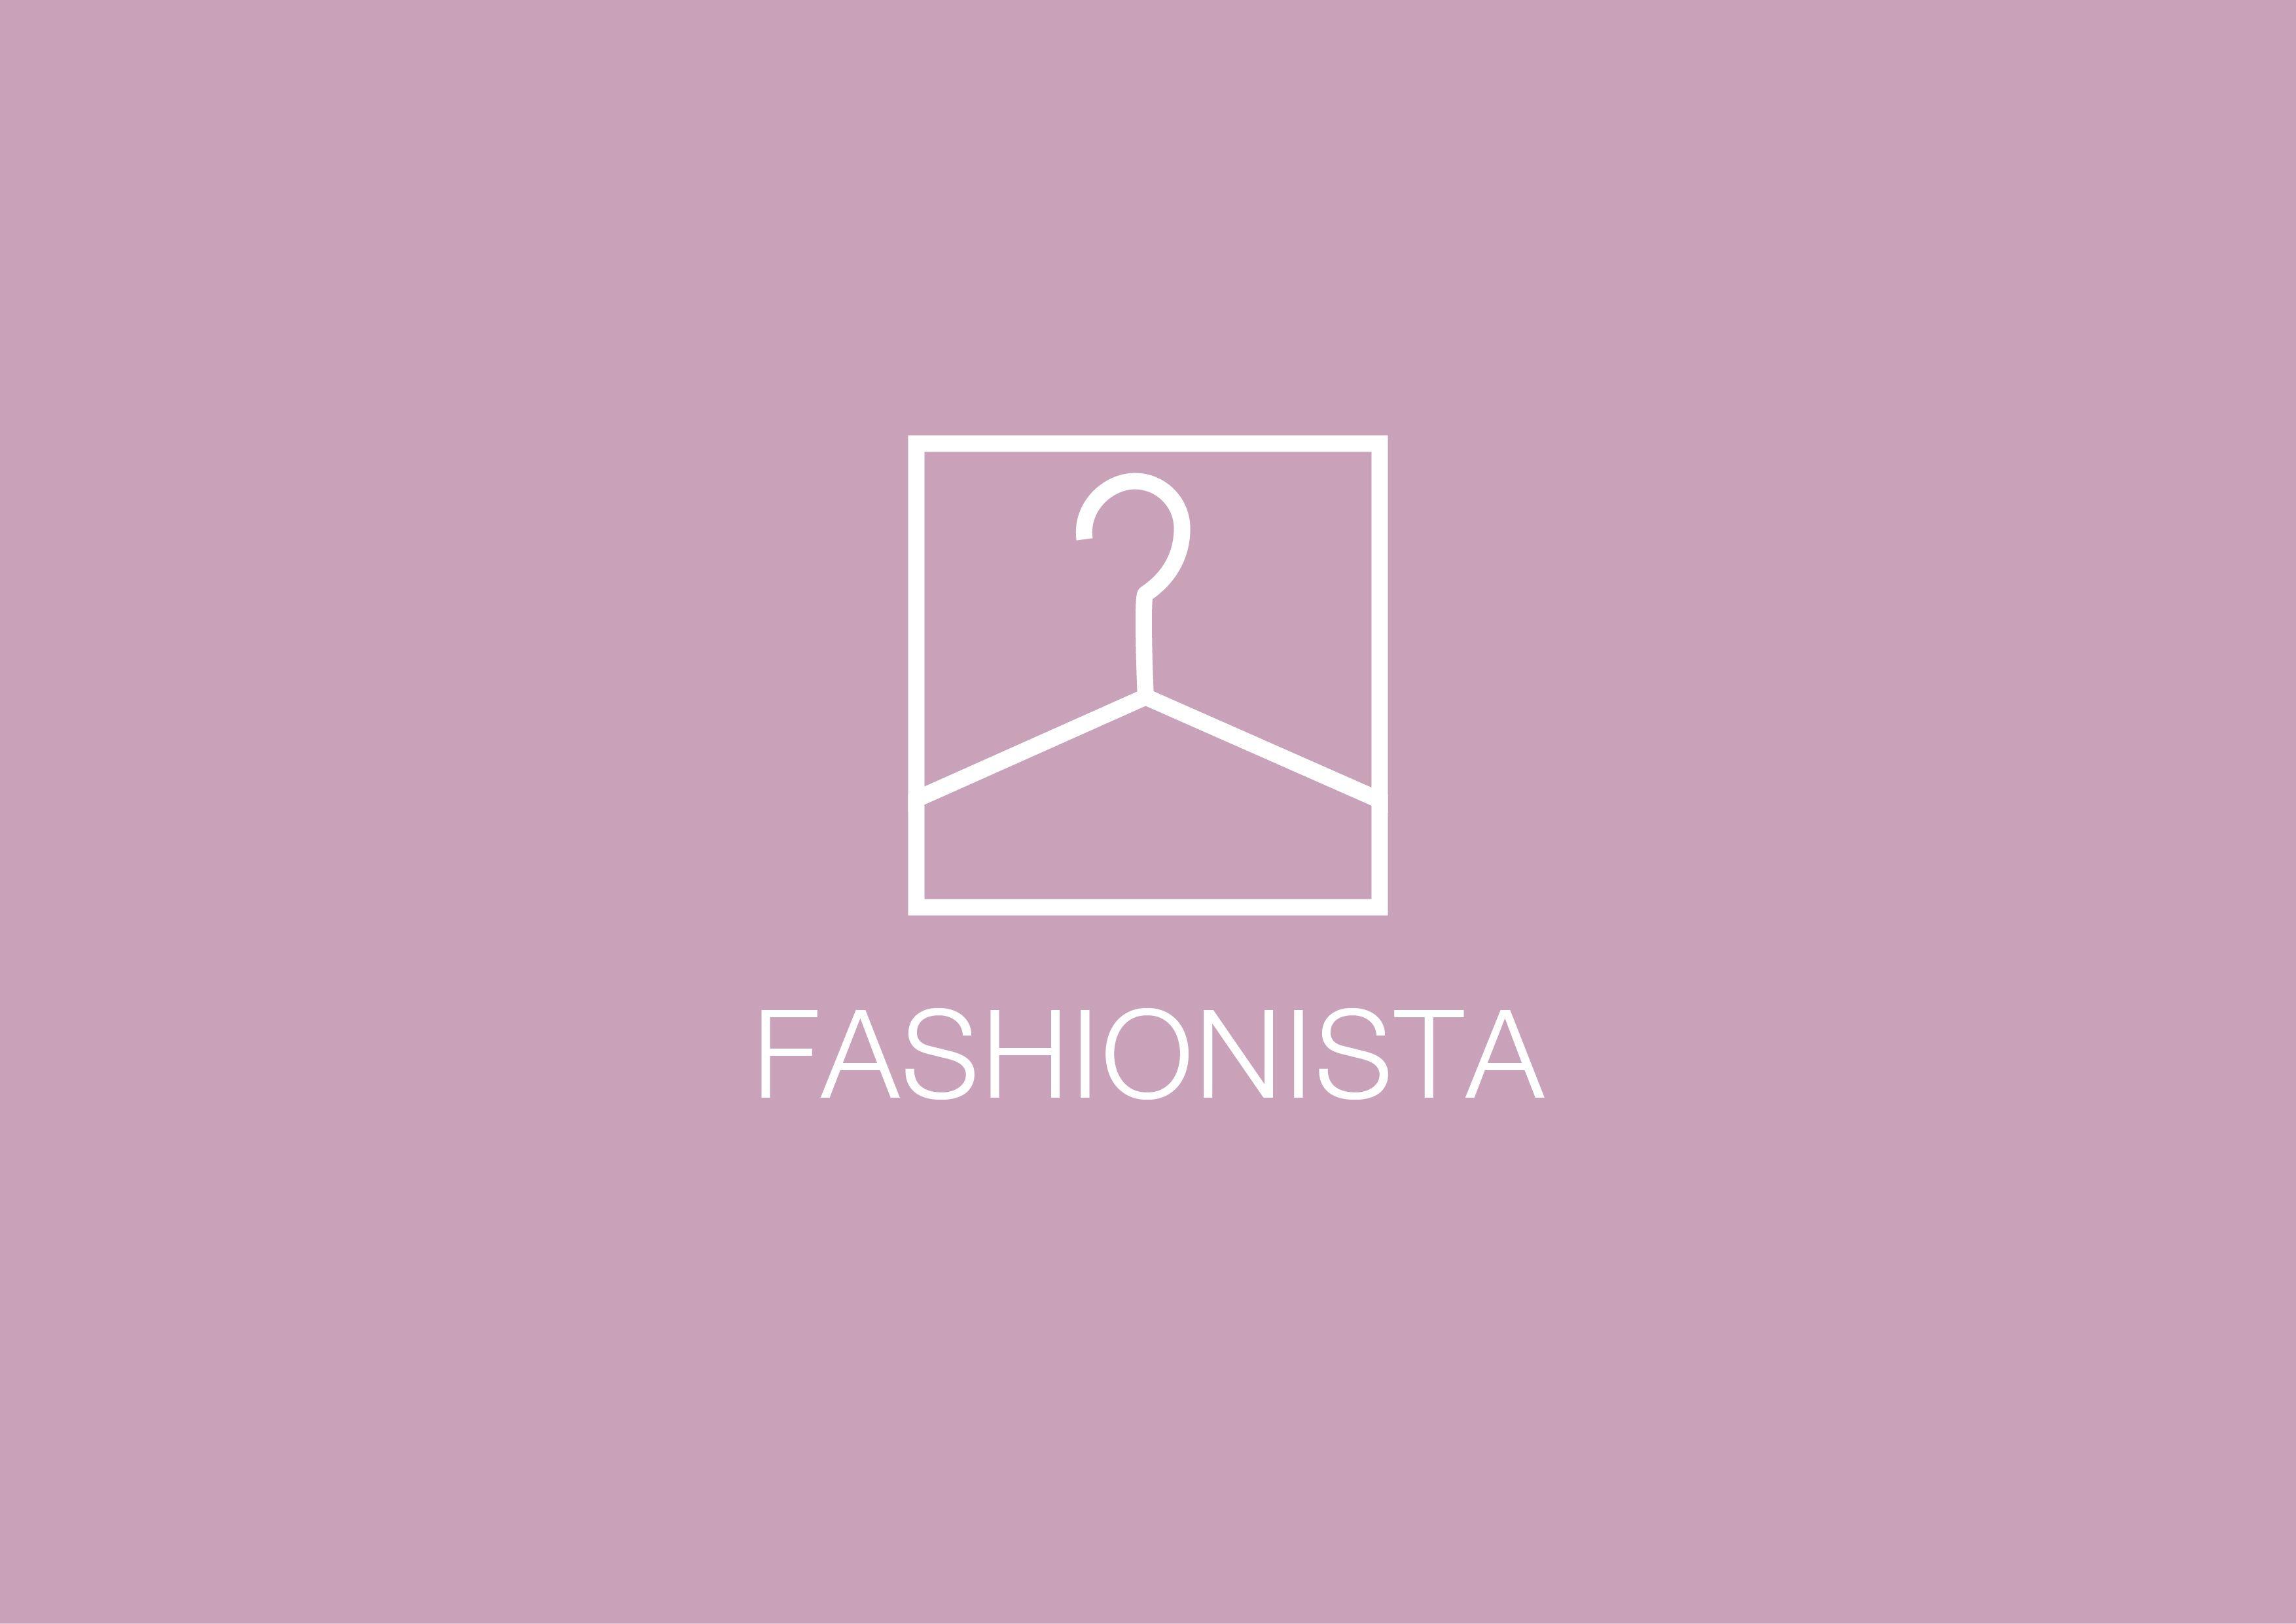 Fashionista Logo - Logo Design Challenge #28. Fashionista is a women's fashion app that ...